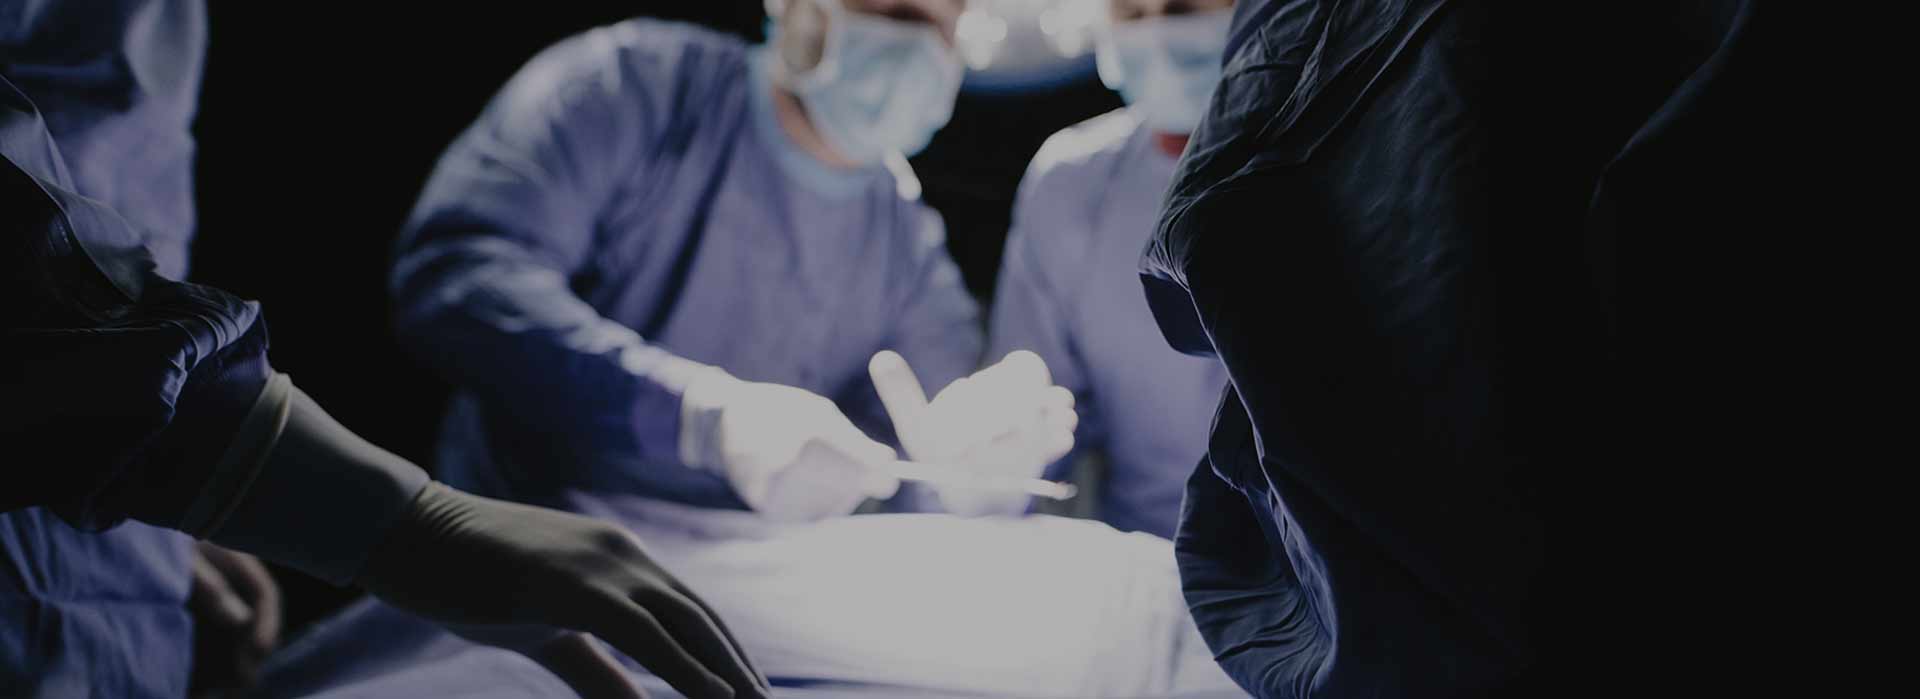 Precautions After Circumcision Stapler Surgery with Circumcision Stapler (part 1)